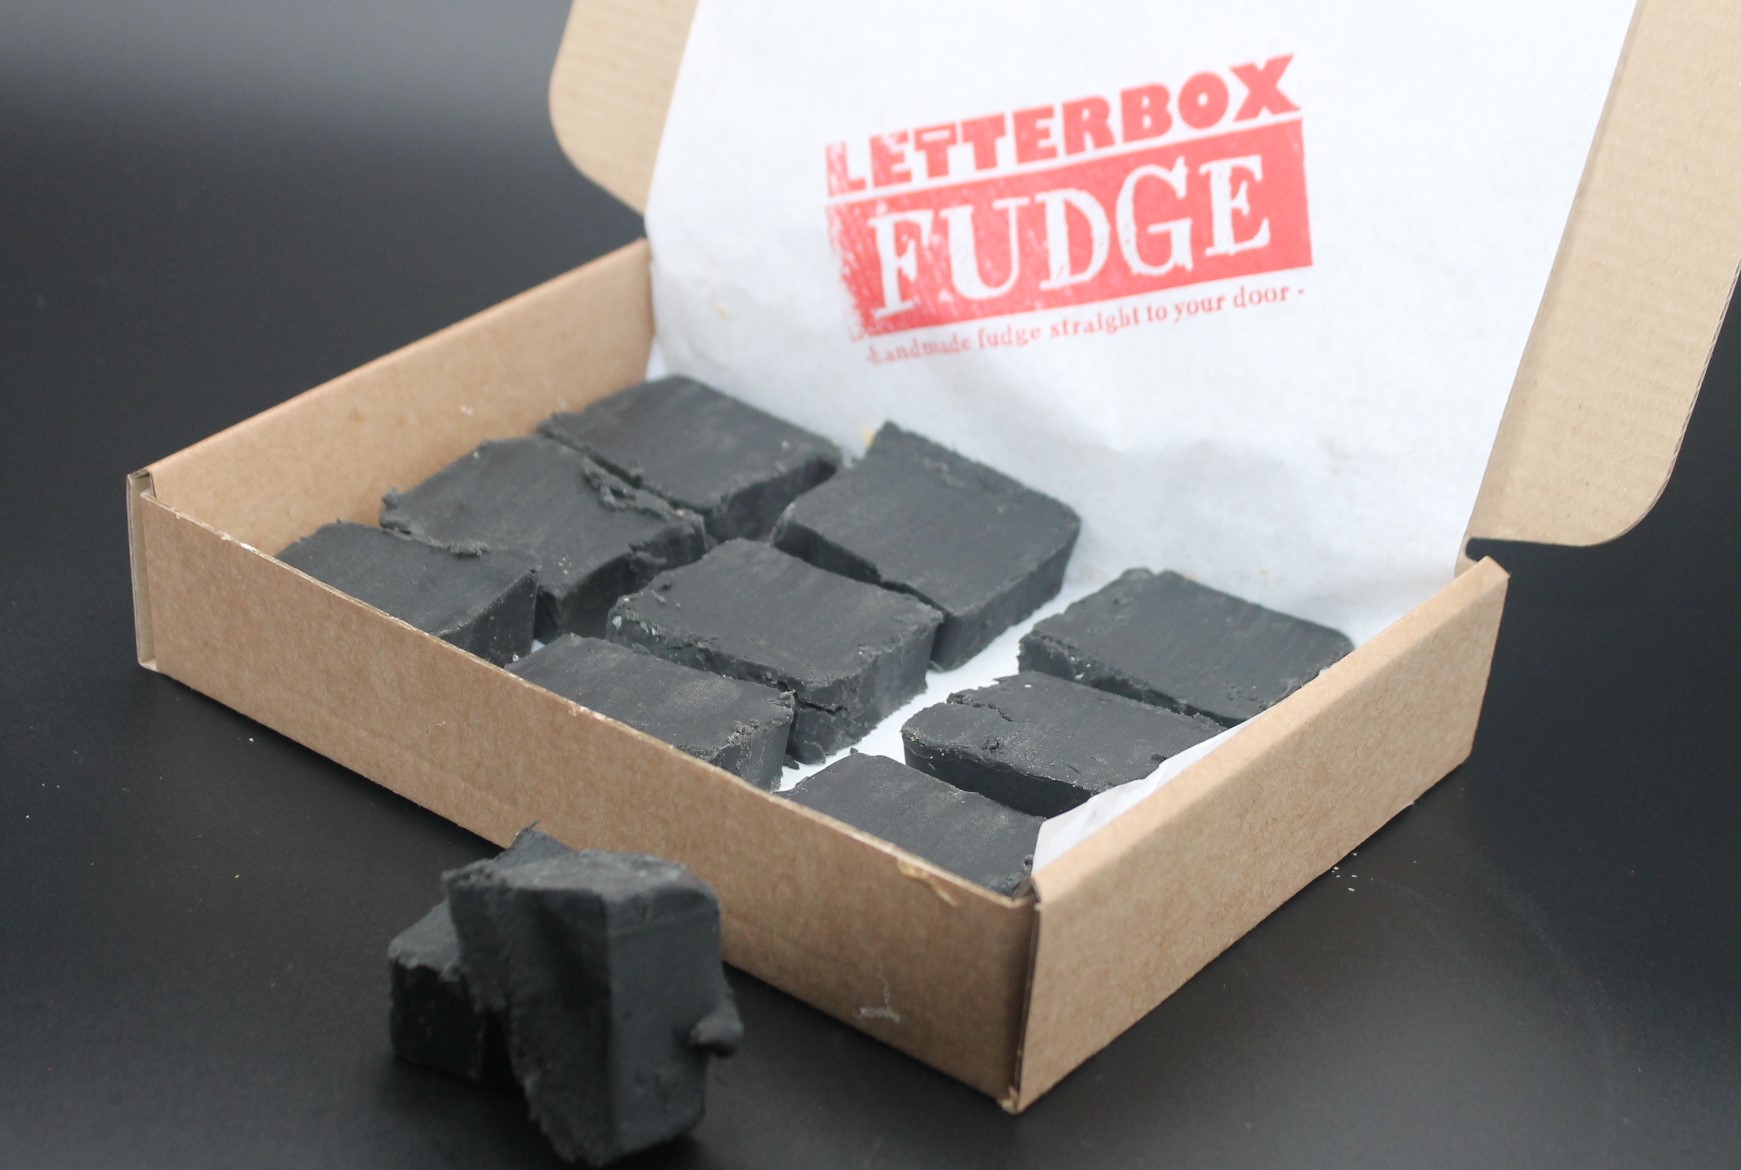 Letterbox Fudge